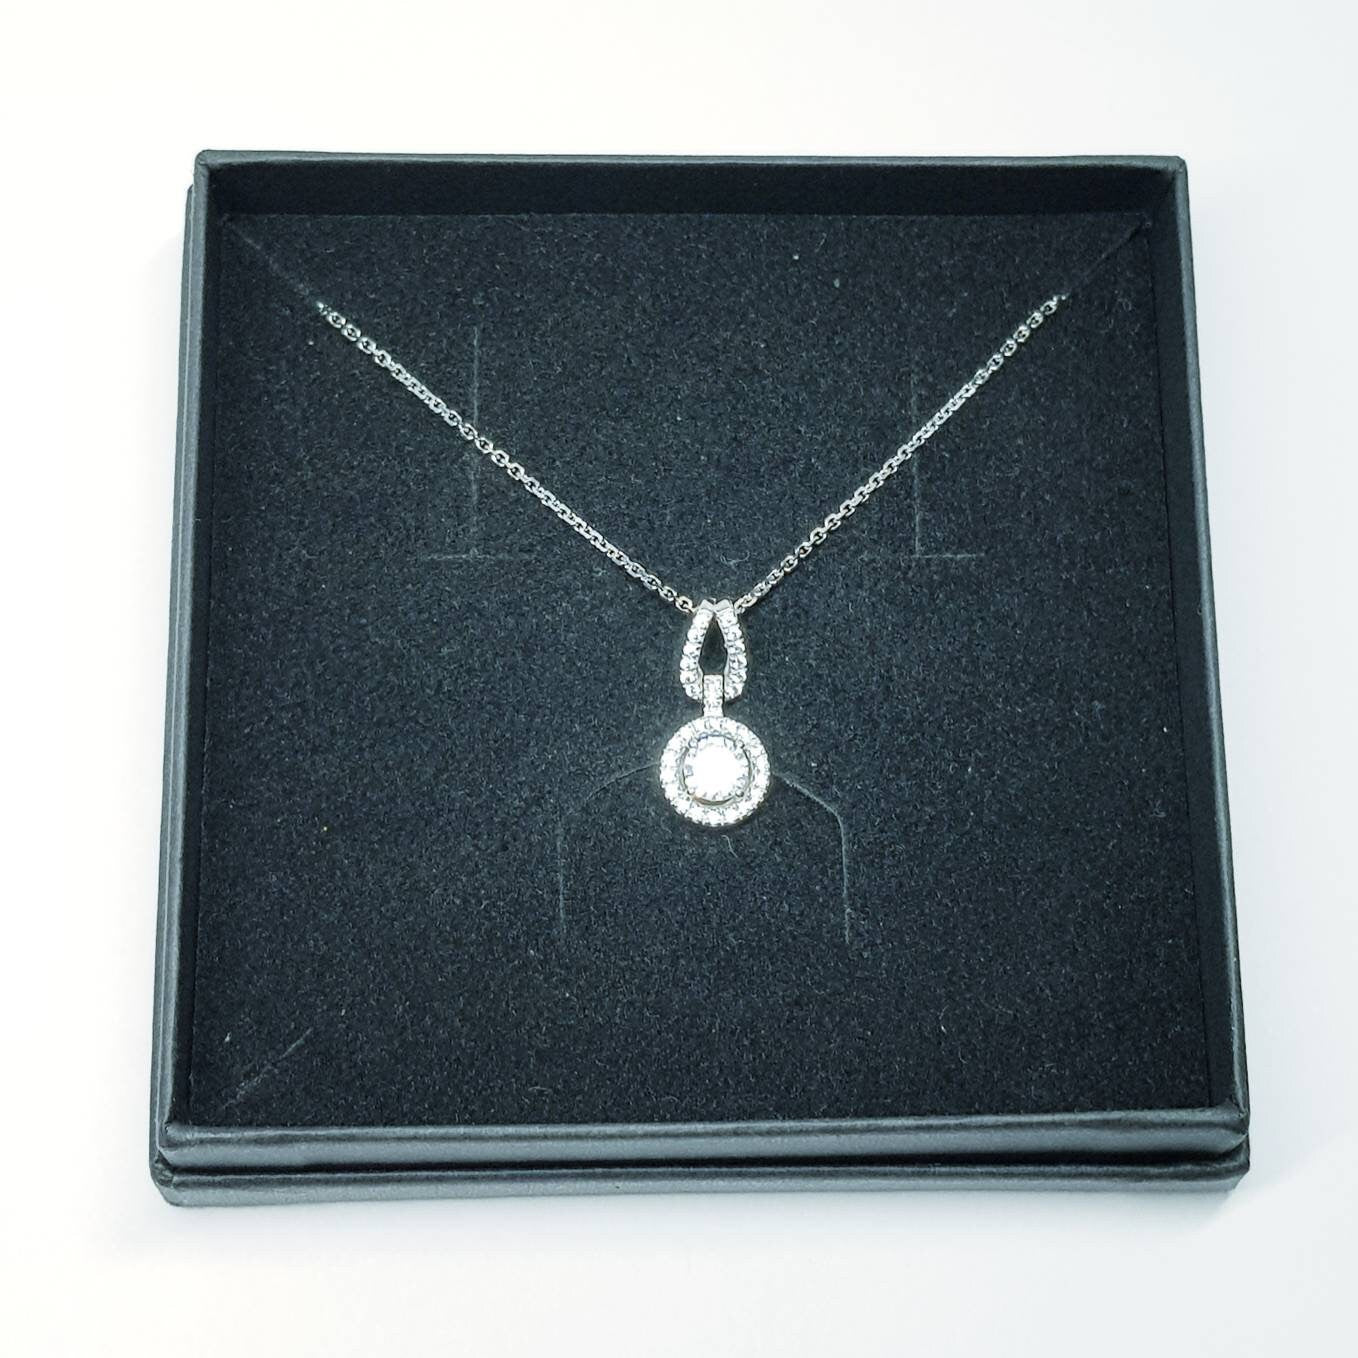 Dainty sterling silver vinatge halo necklace with split bale